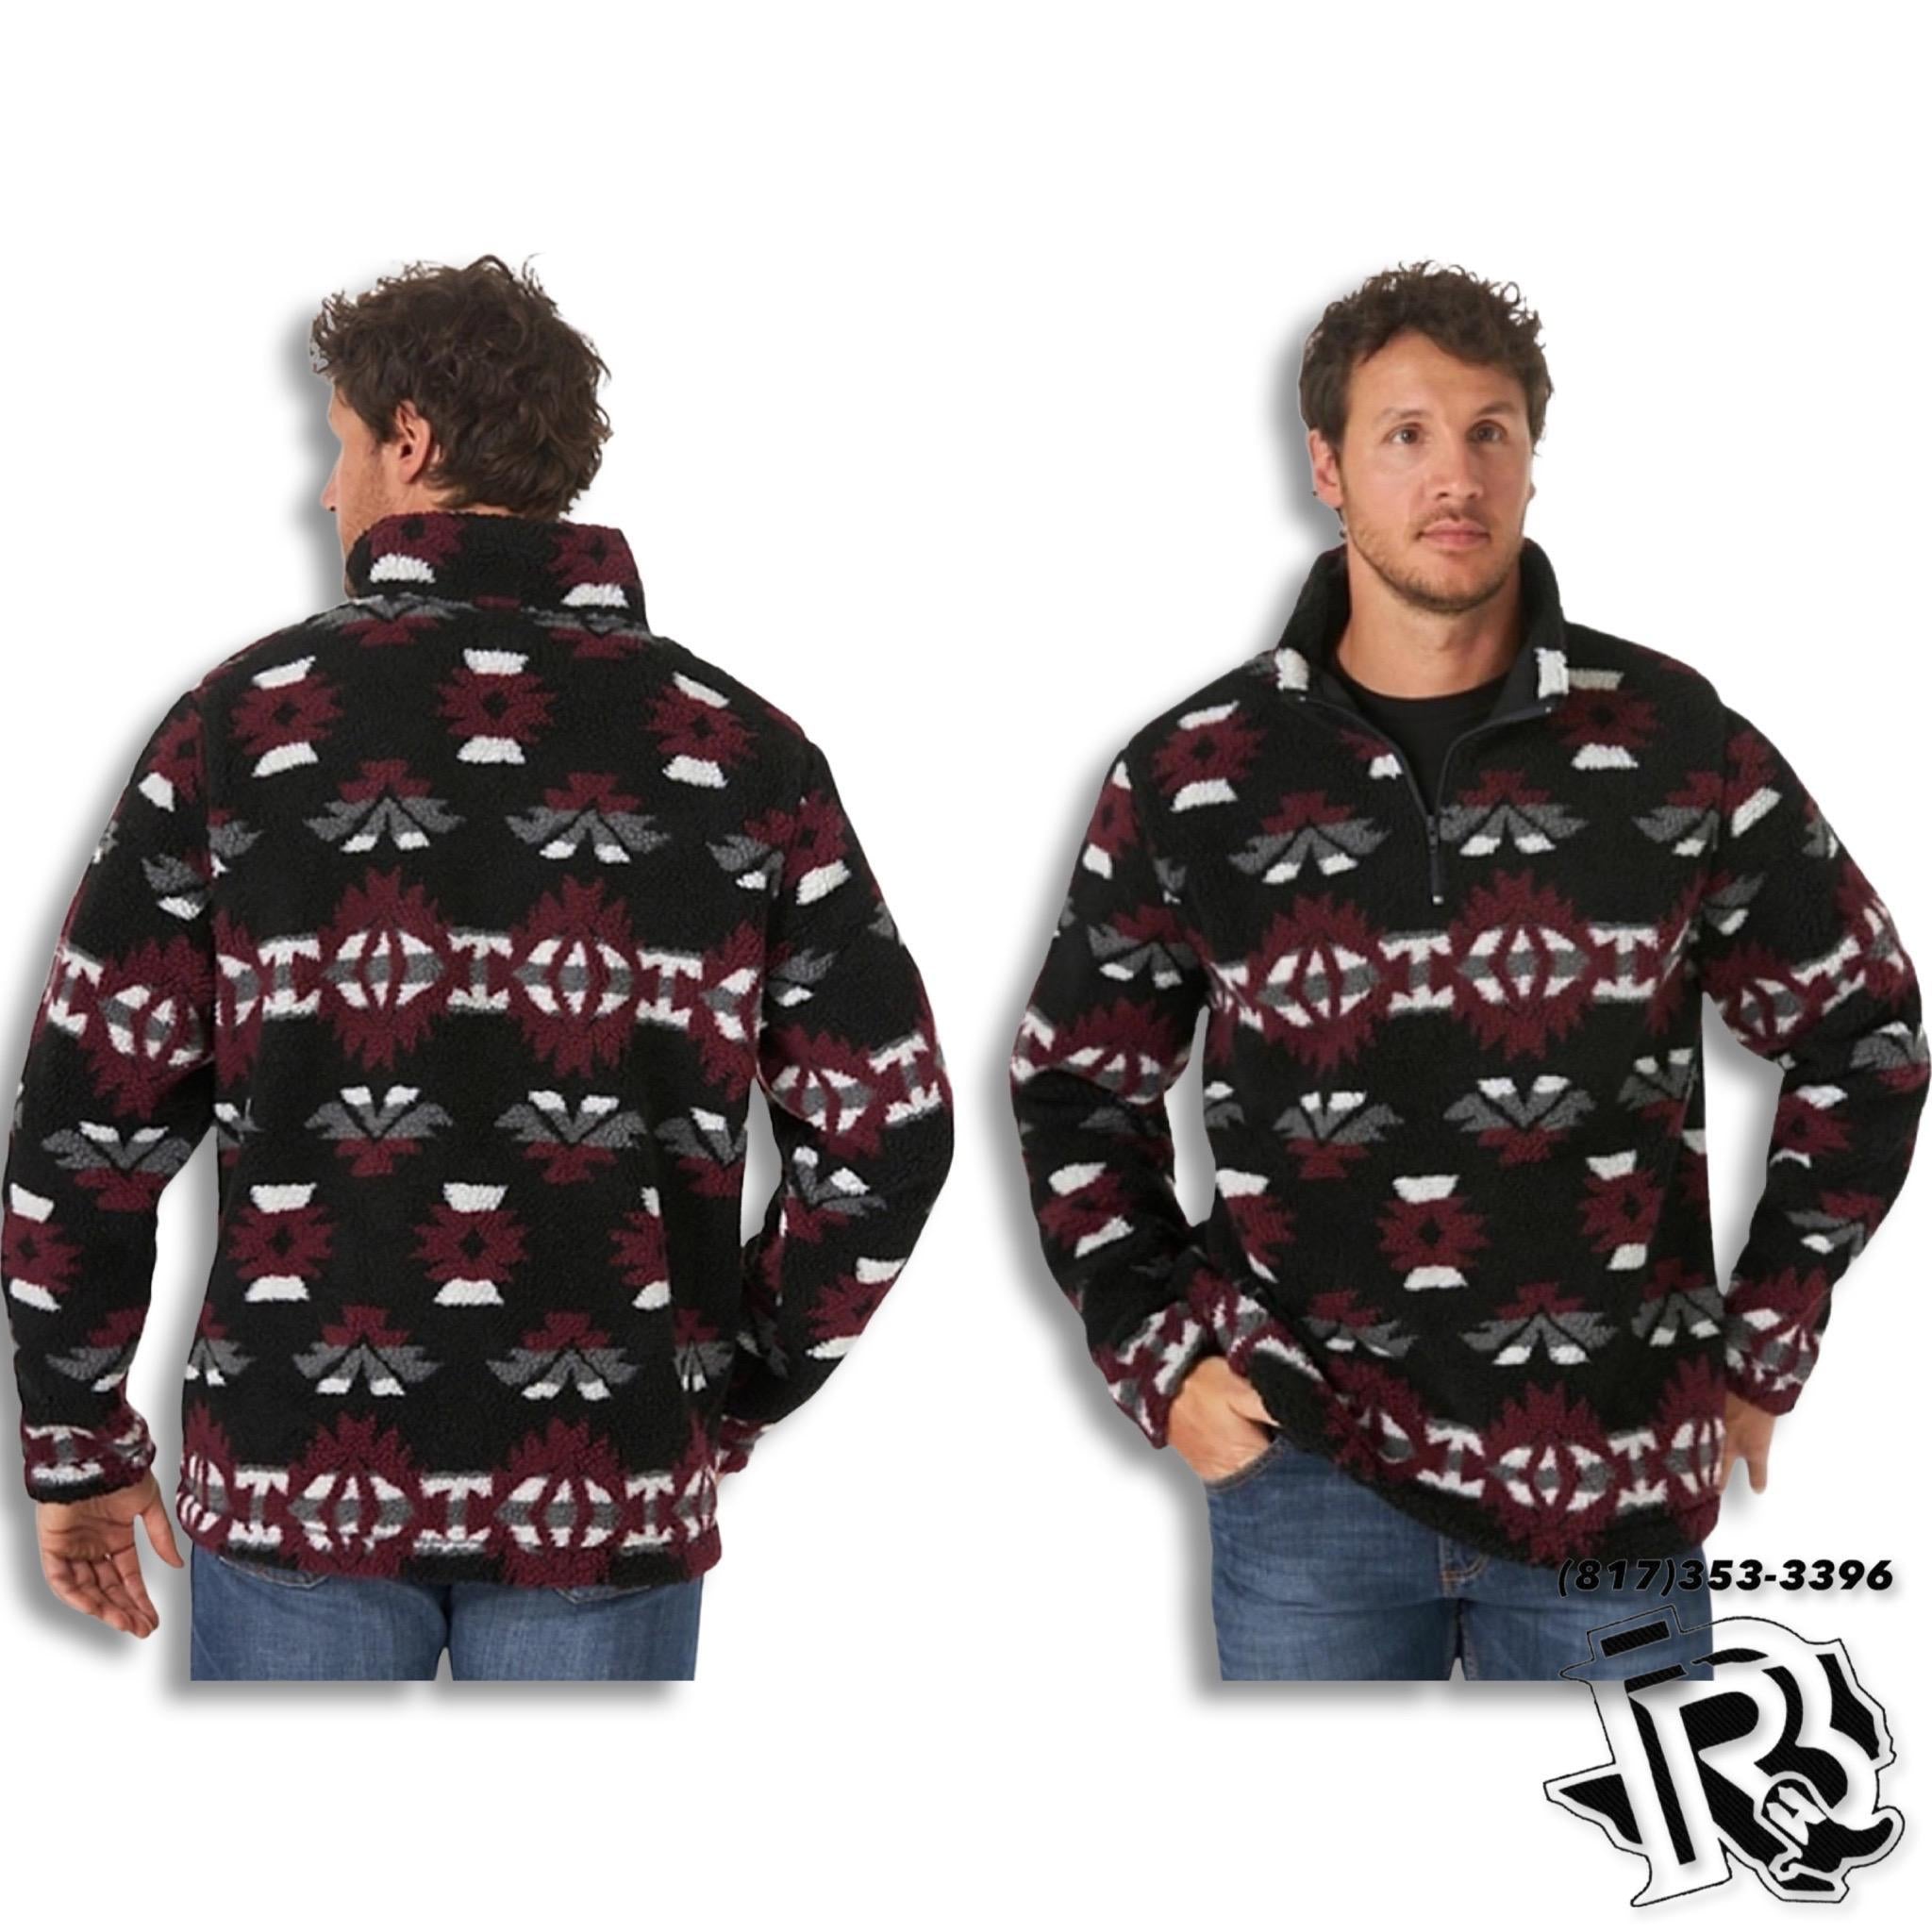 Millenium Falcon sweater – Gypsy Mens